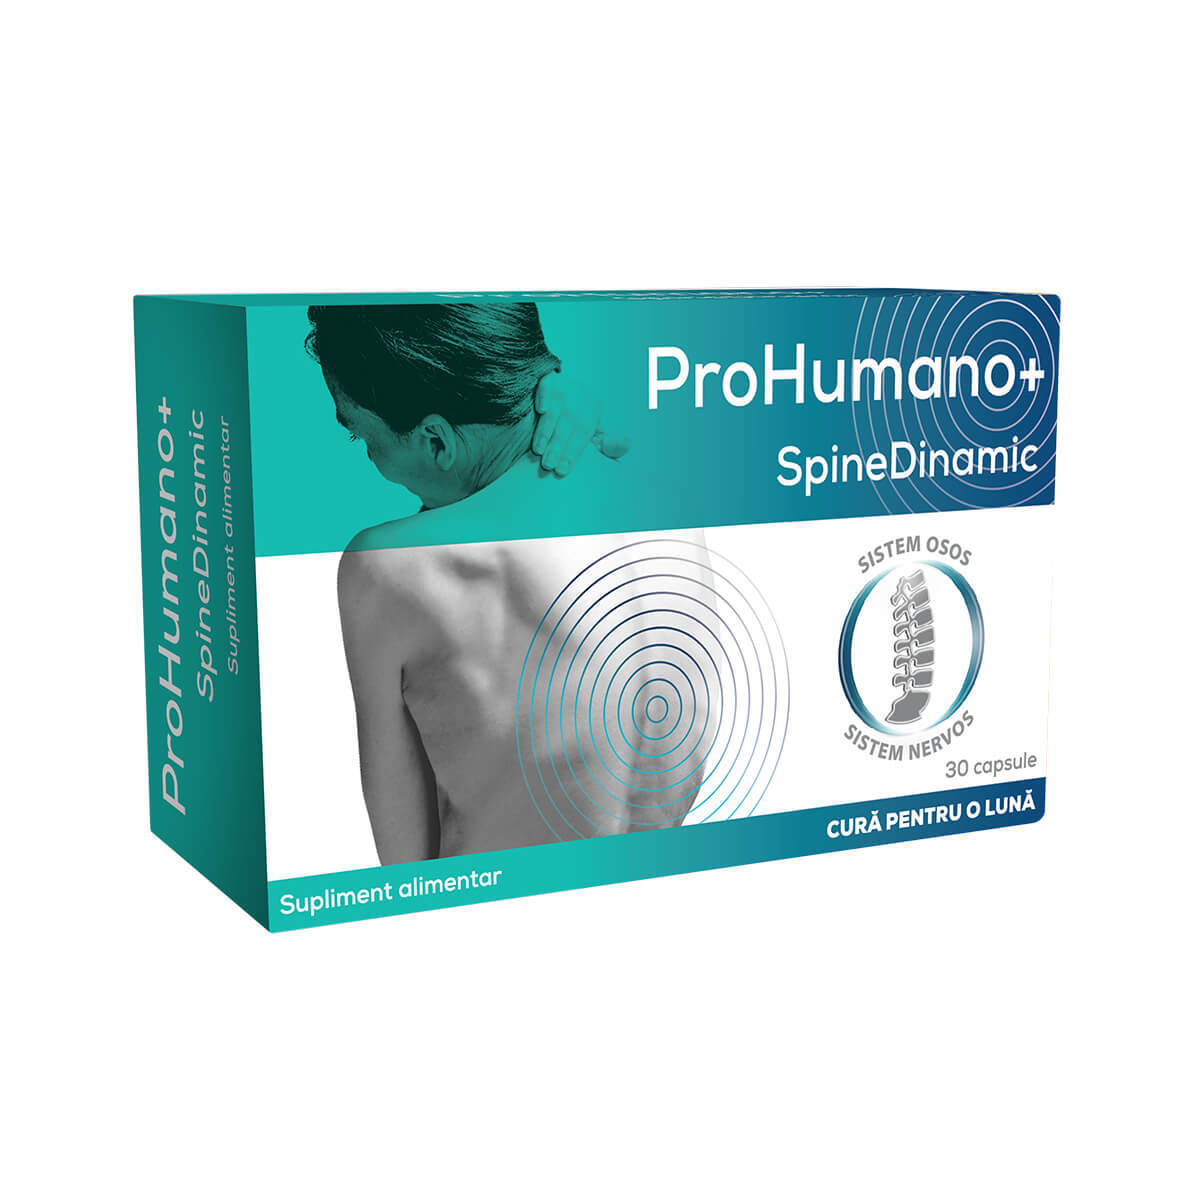 ProHumano + SpineDinamic, 30 capsule, Pharmalinea Vitamine si suplimente